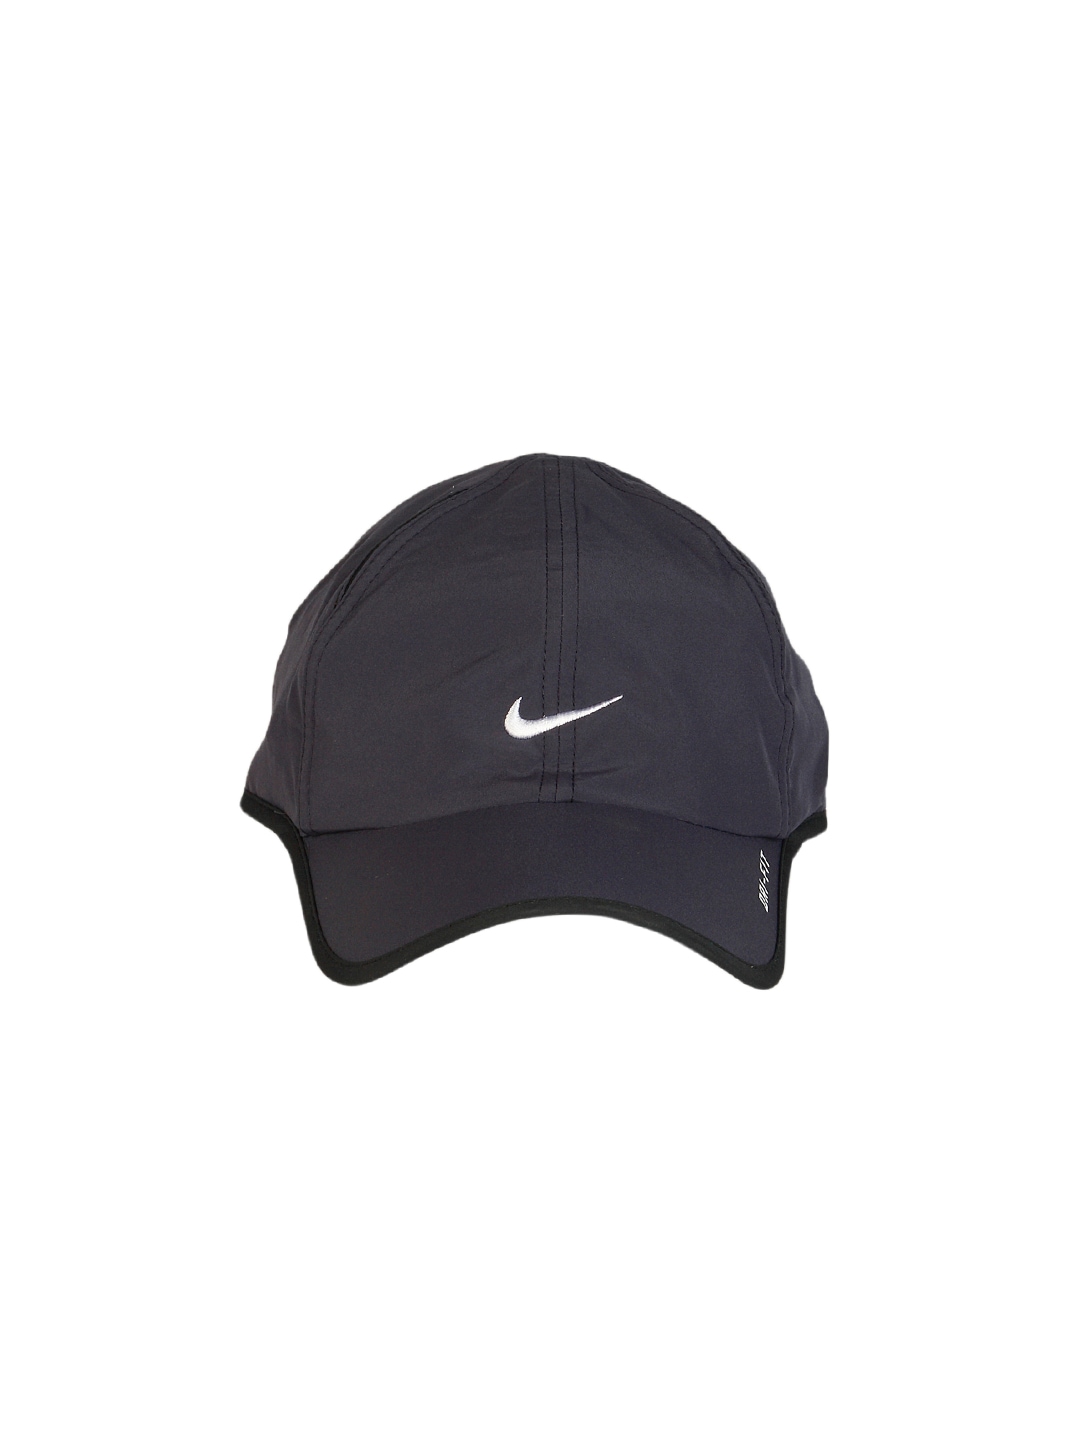 Nike Unisex Dry Fit Navy Blue Cap